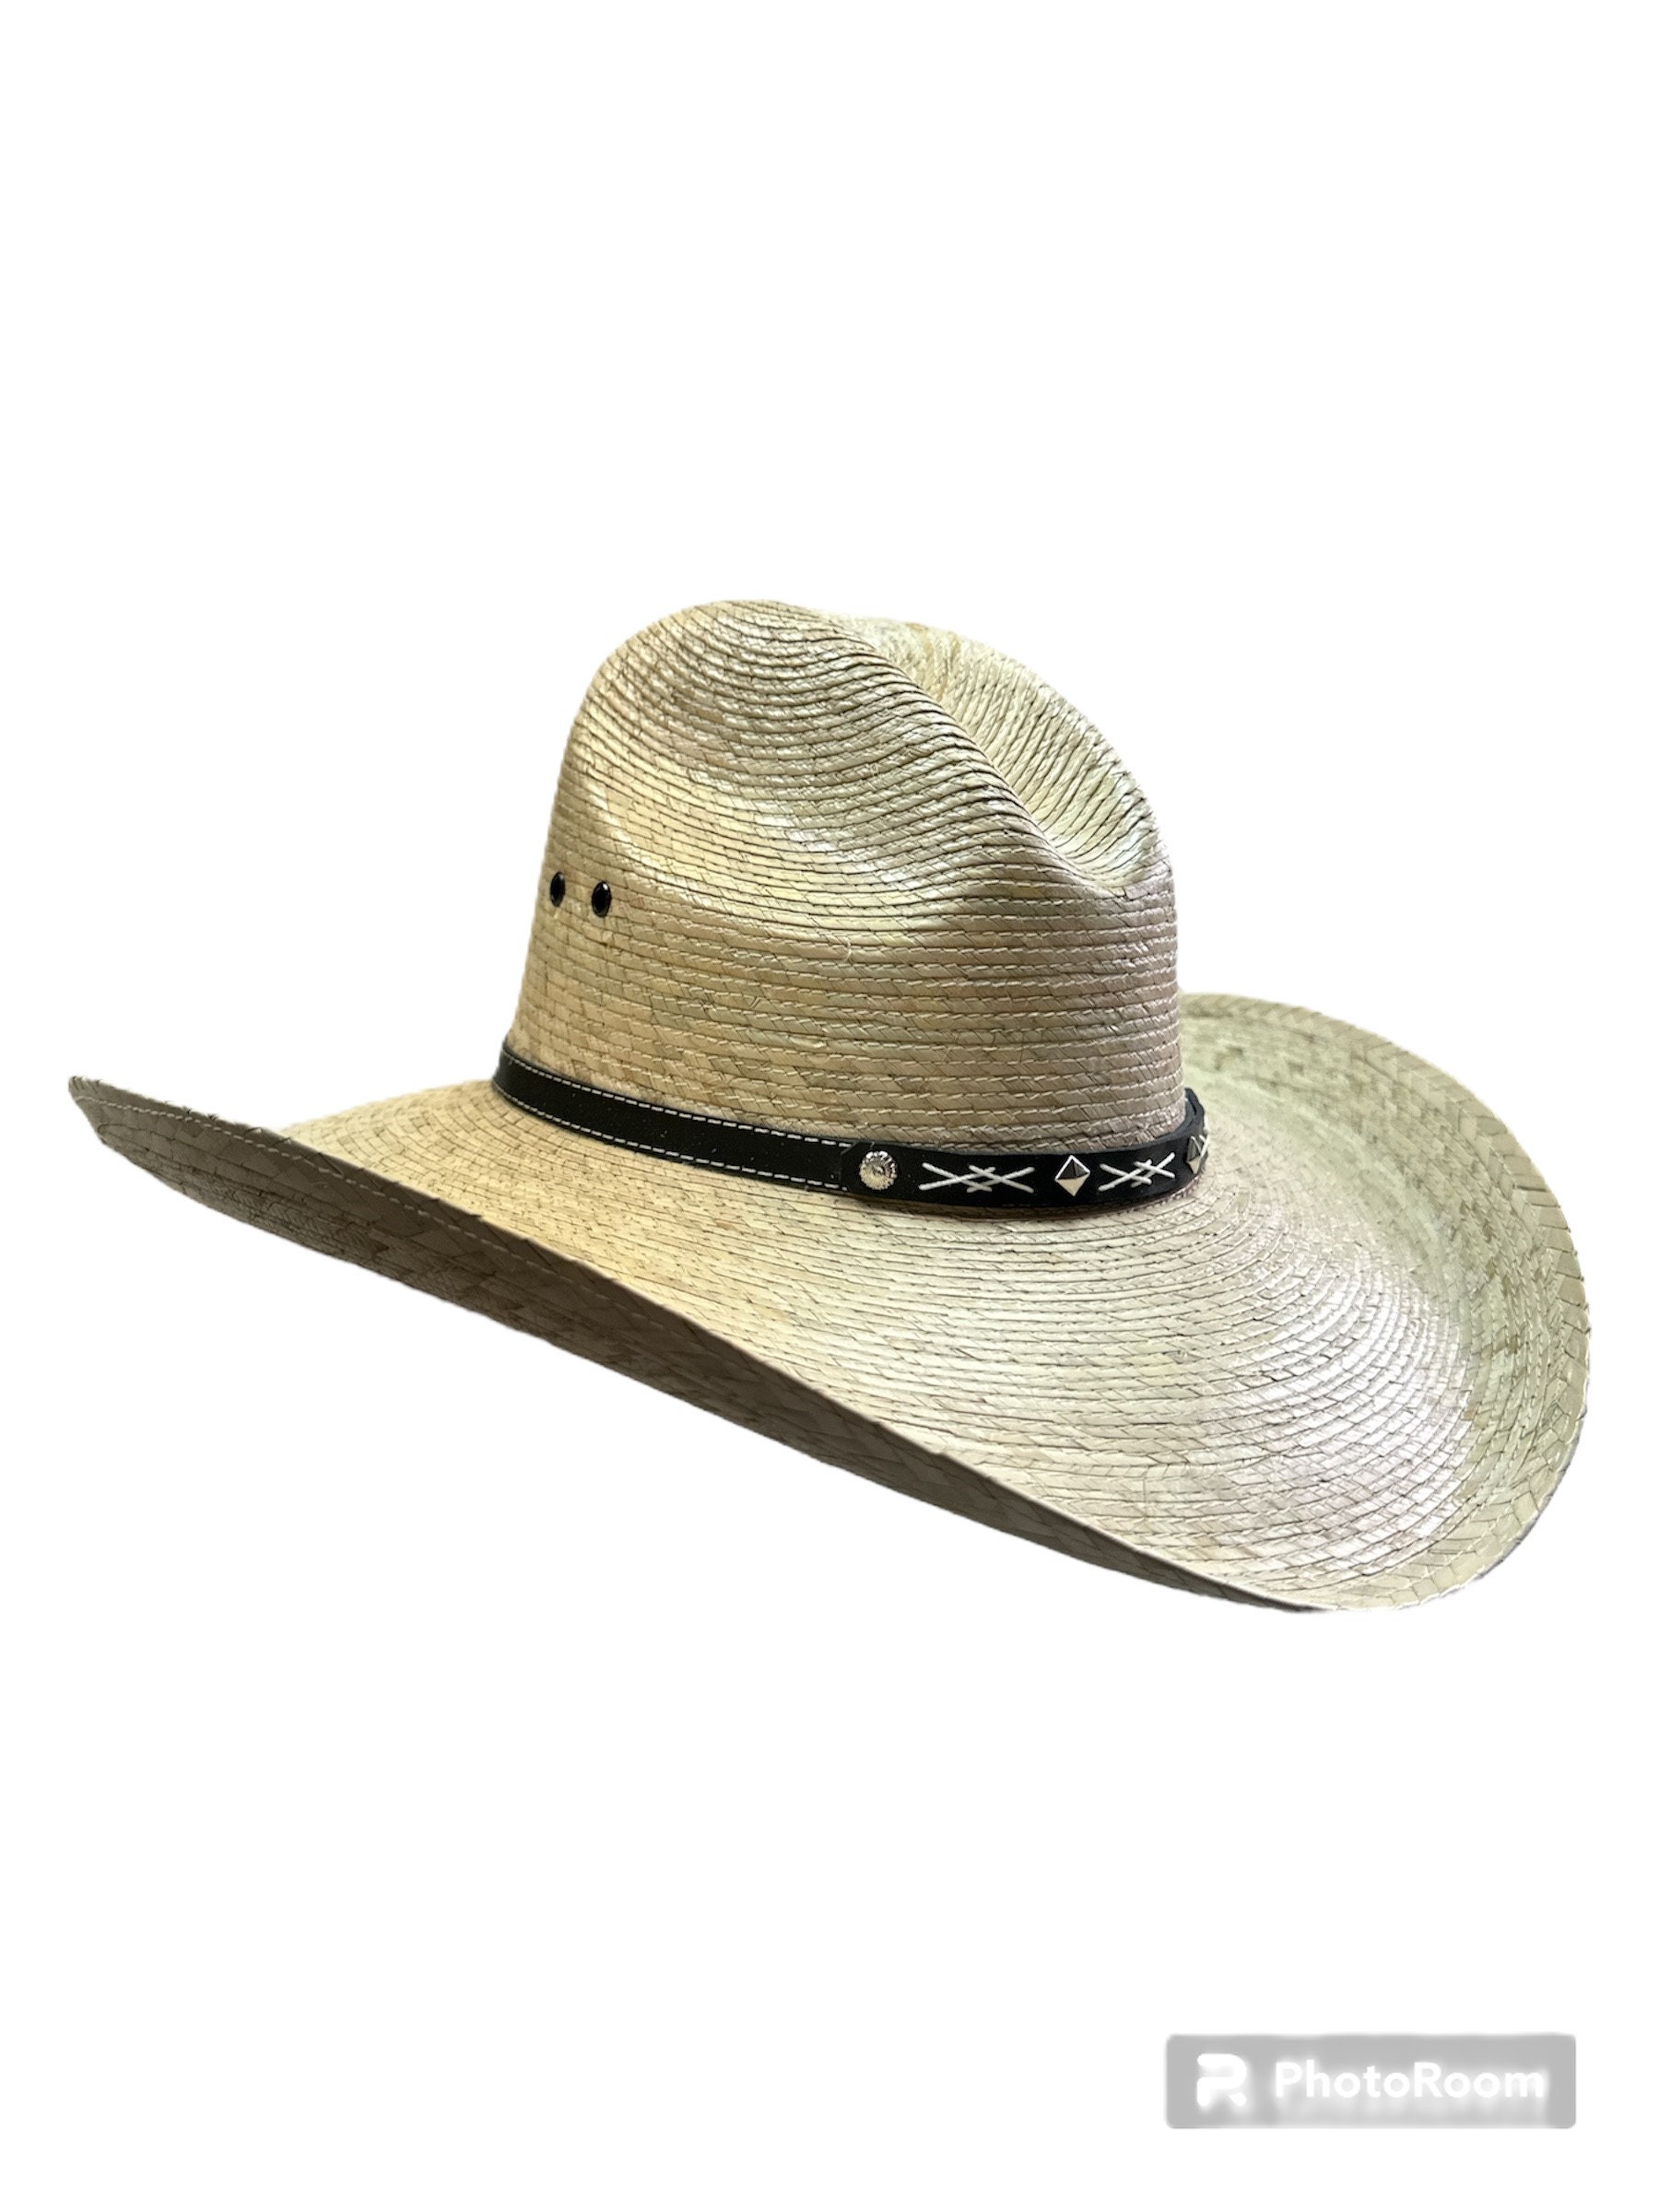 Palm Cowboy Hat 